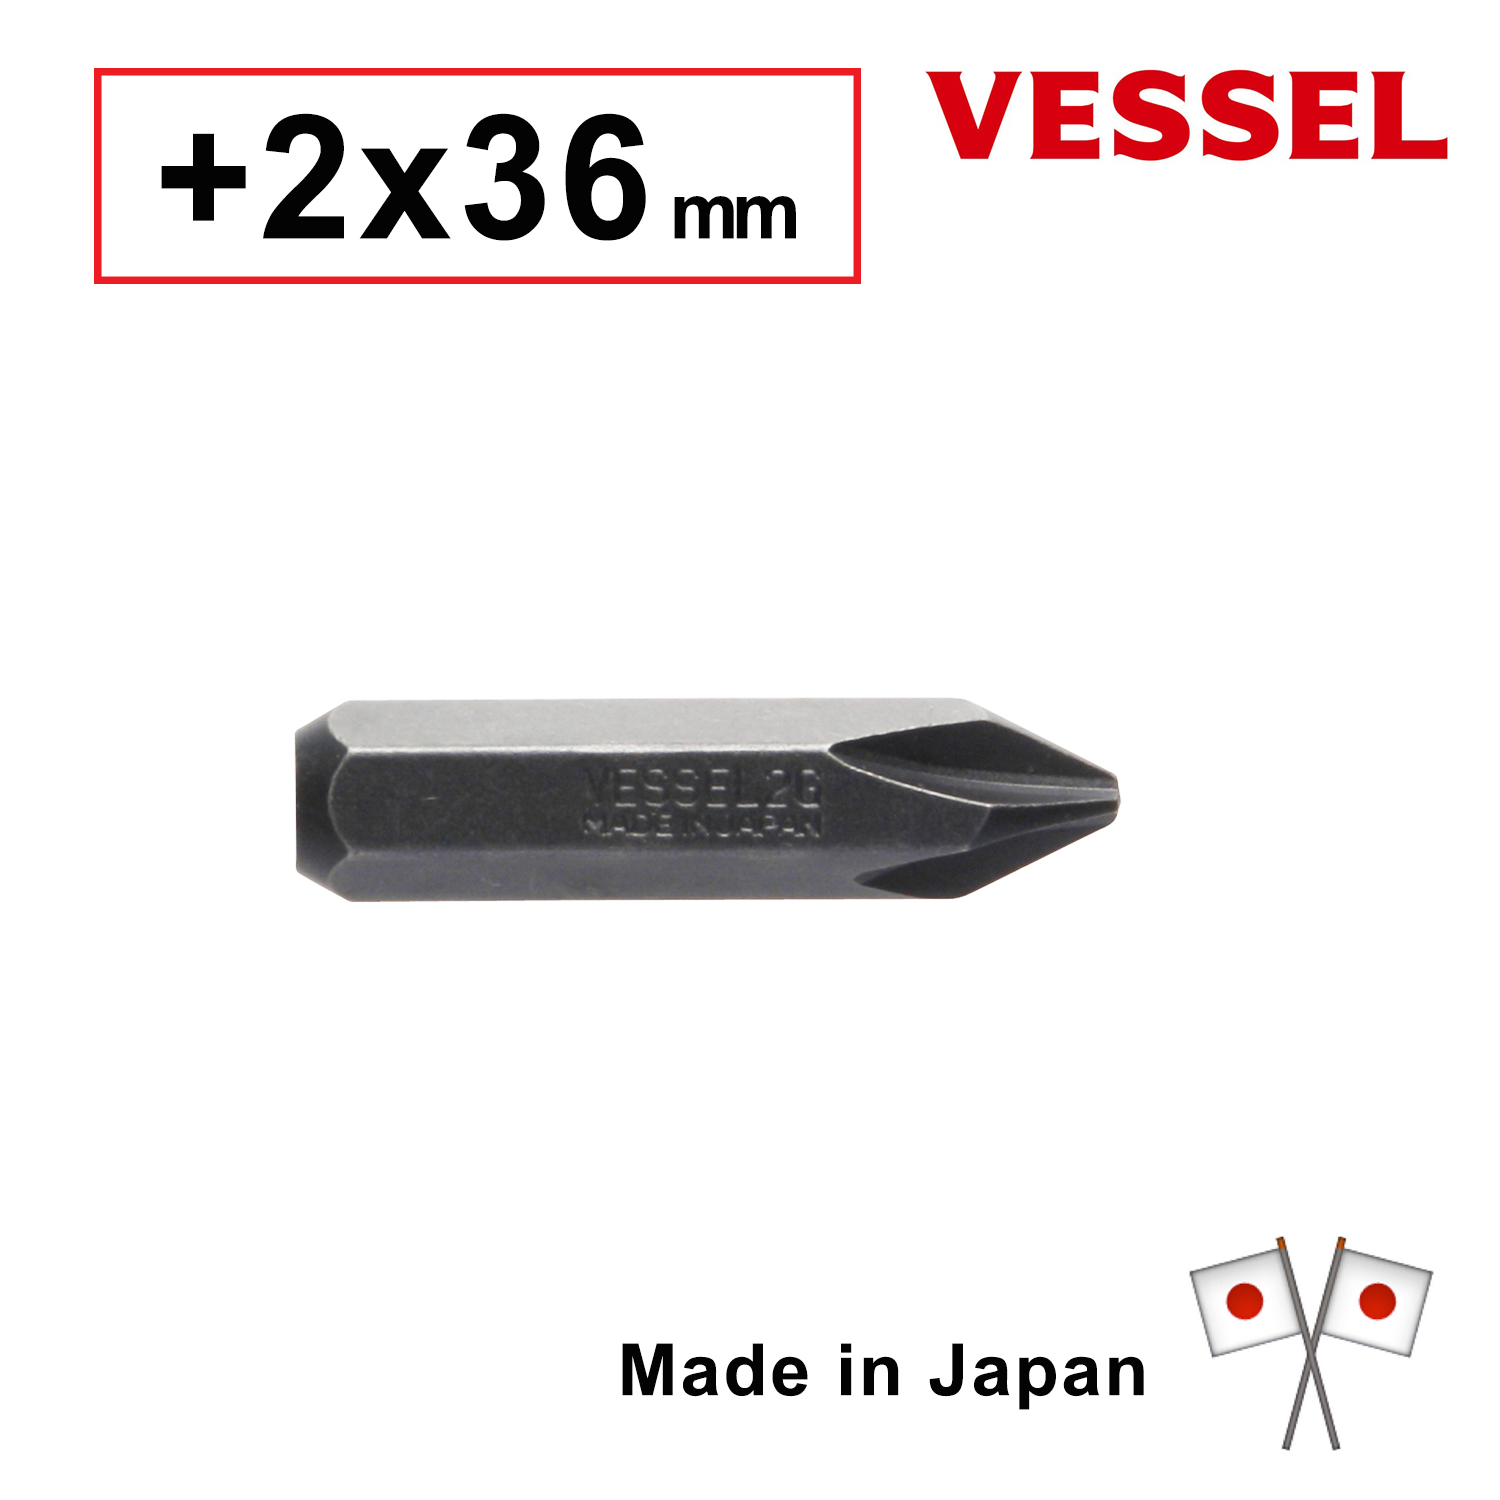 Vessel ดอกไขควงตอก No.C51 PH2 ( 3 ความยาวเลือกได้ตอนสั่งซื้อ) Made in Japan